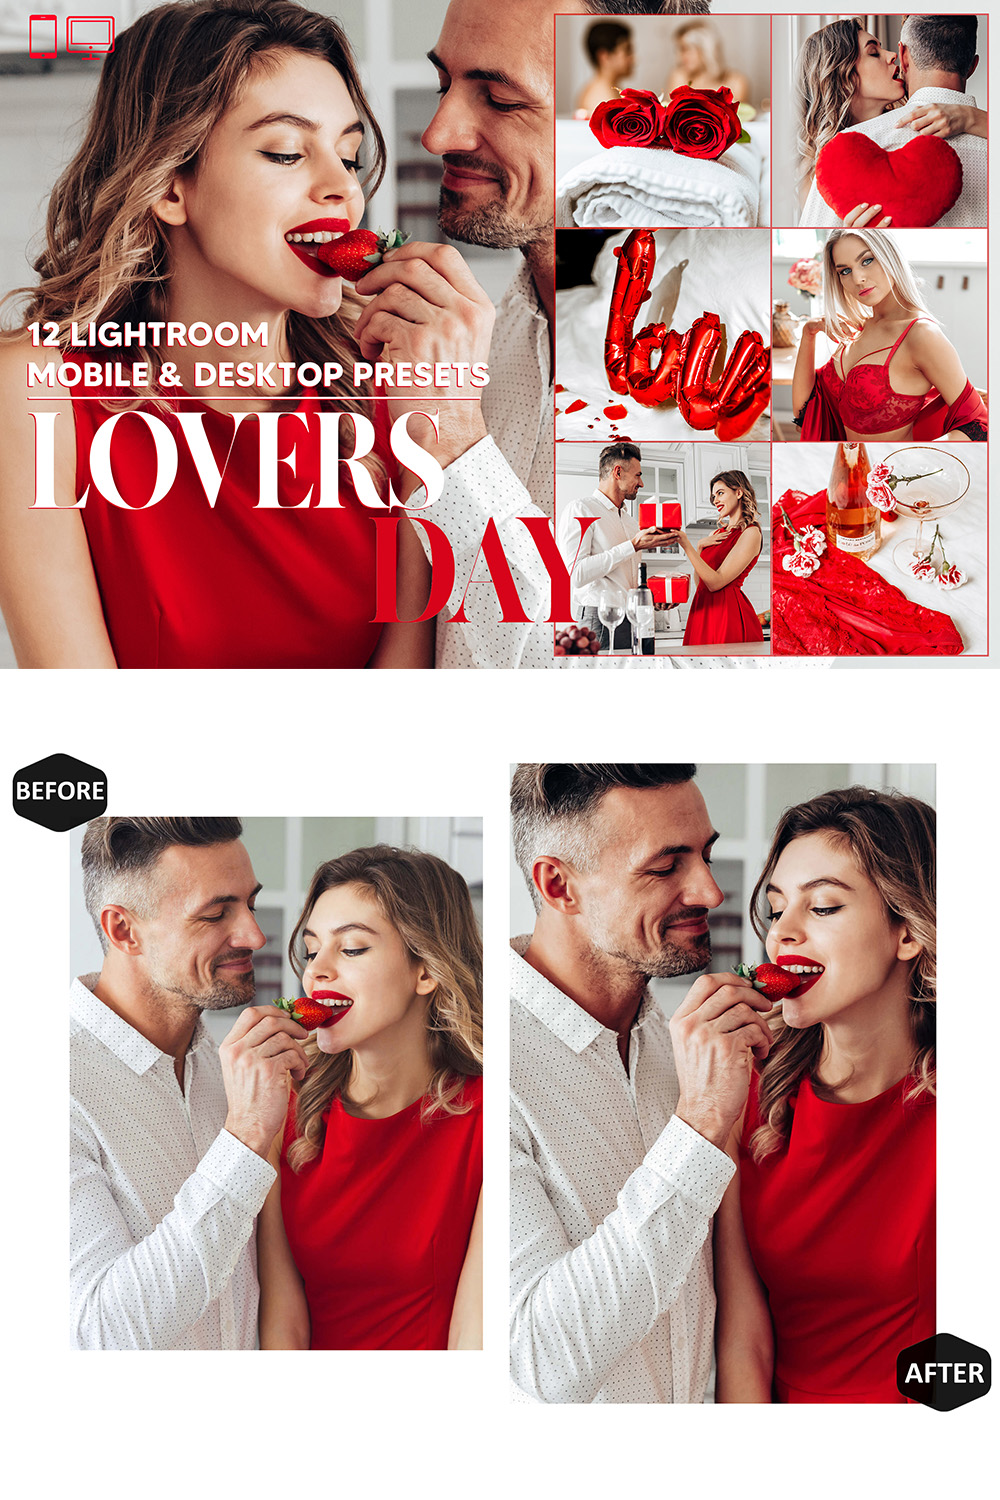 12 Lovers Day Lightroom Presets, Valentine Mobile Preset, Romance Desktop LR Filter, Blogger, DNG Lifestyle And Portrait Theme For Instagram pinterest preview image.